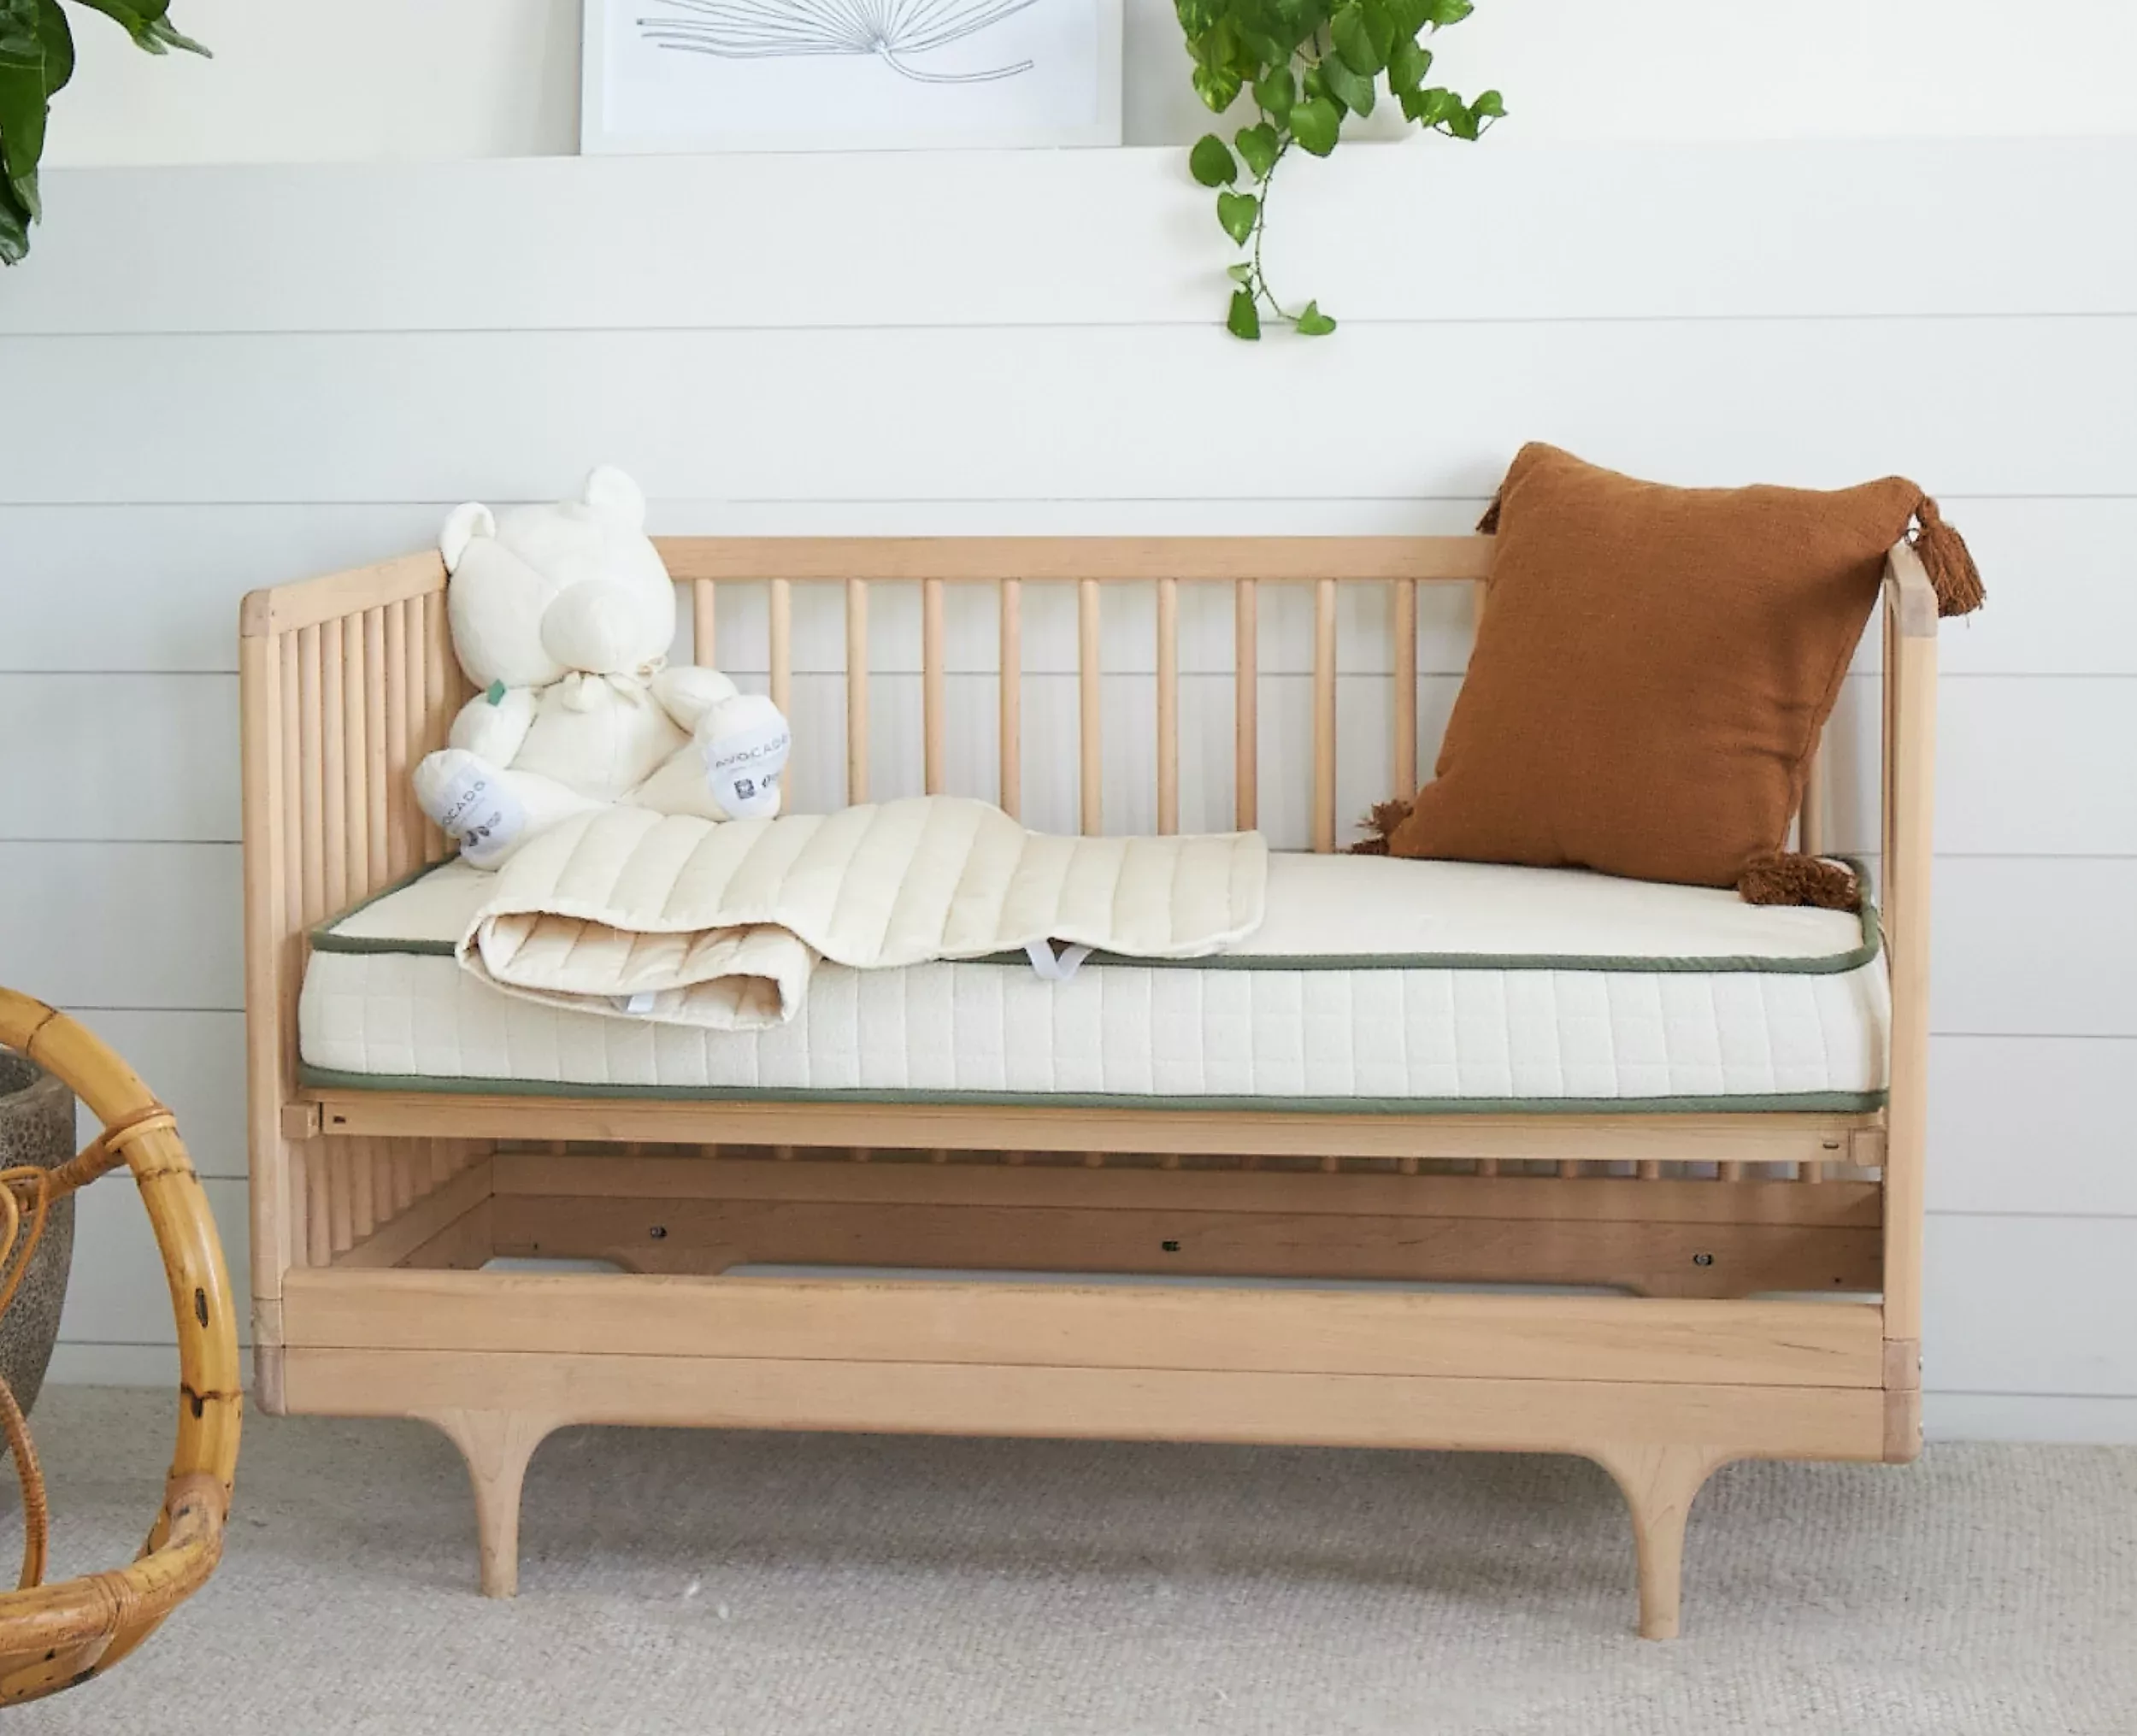 Avocado Organic Crib Mattress in a bedroom setting